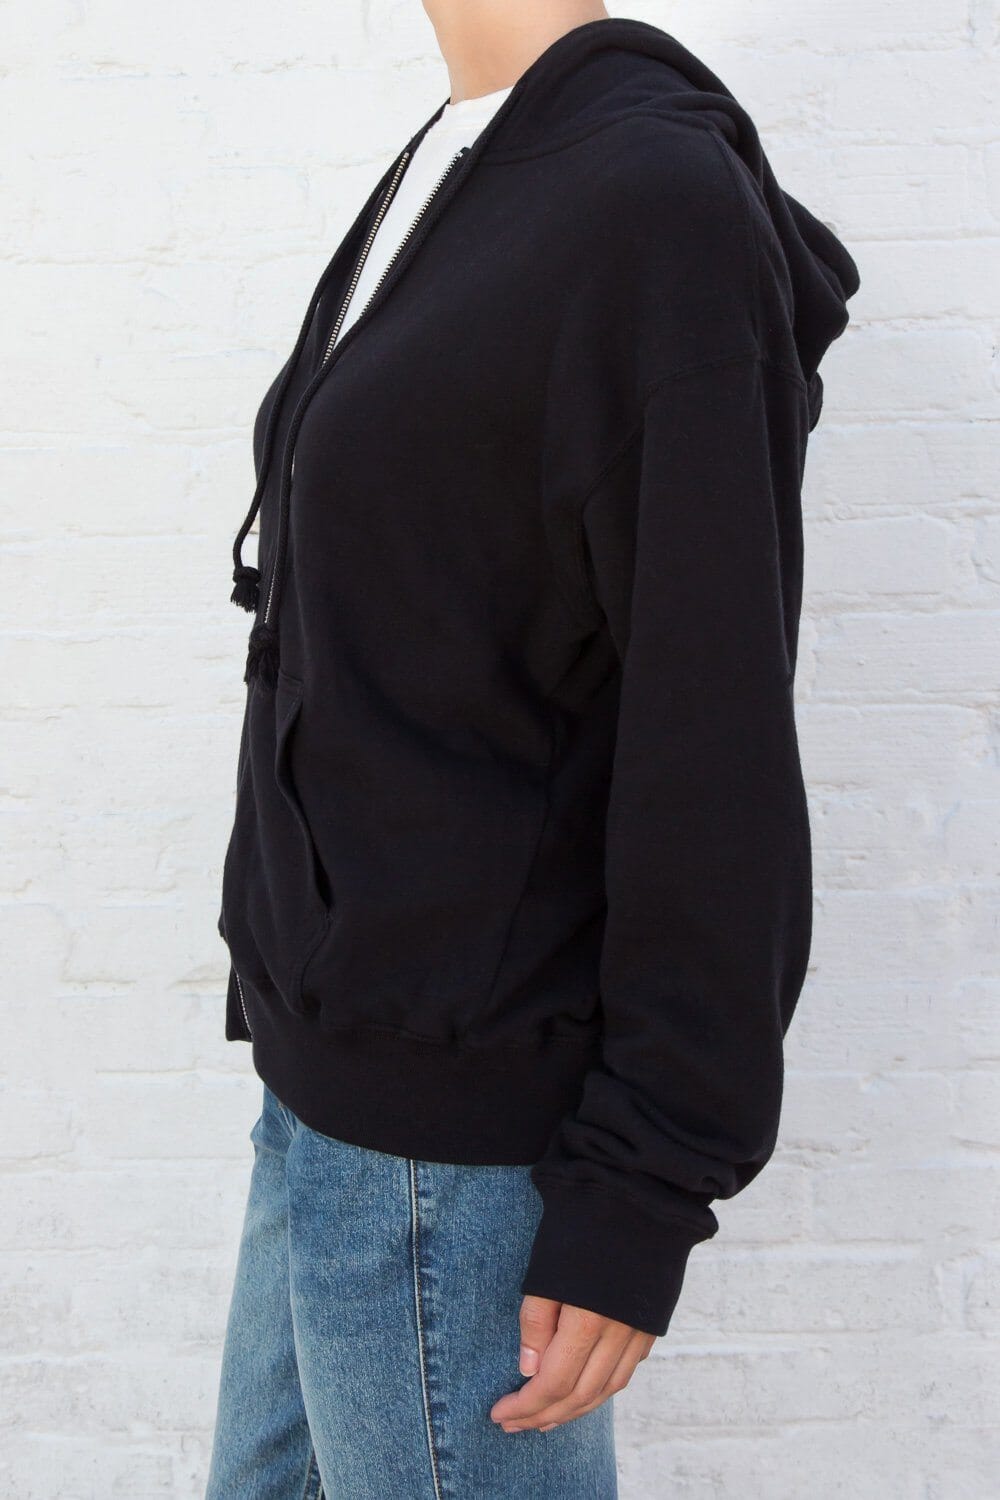 Brandy Melville black oversized hoodie - $55 - From dilan